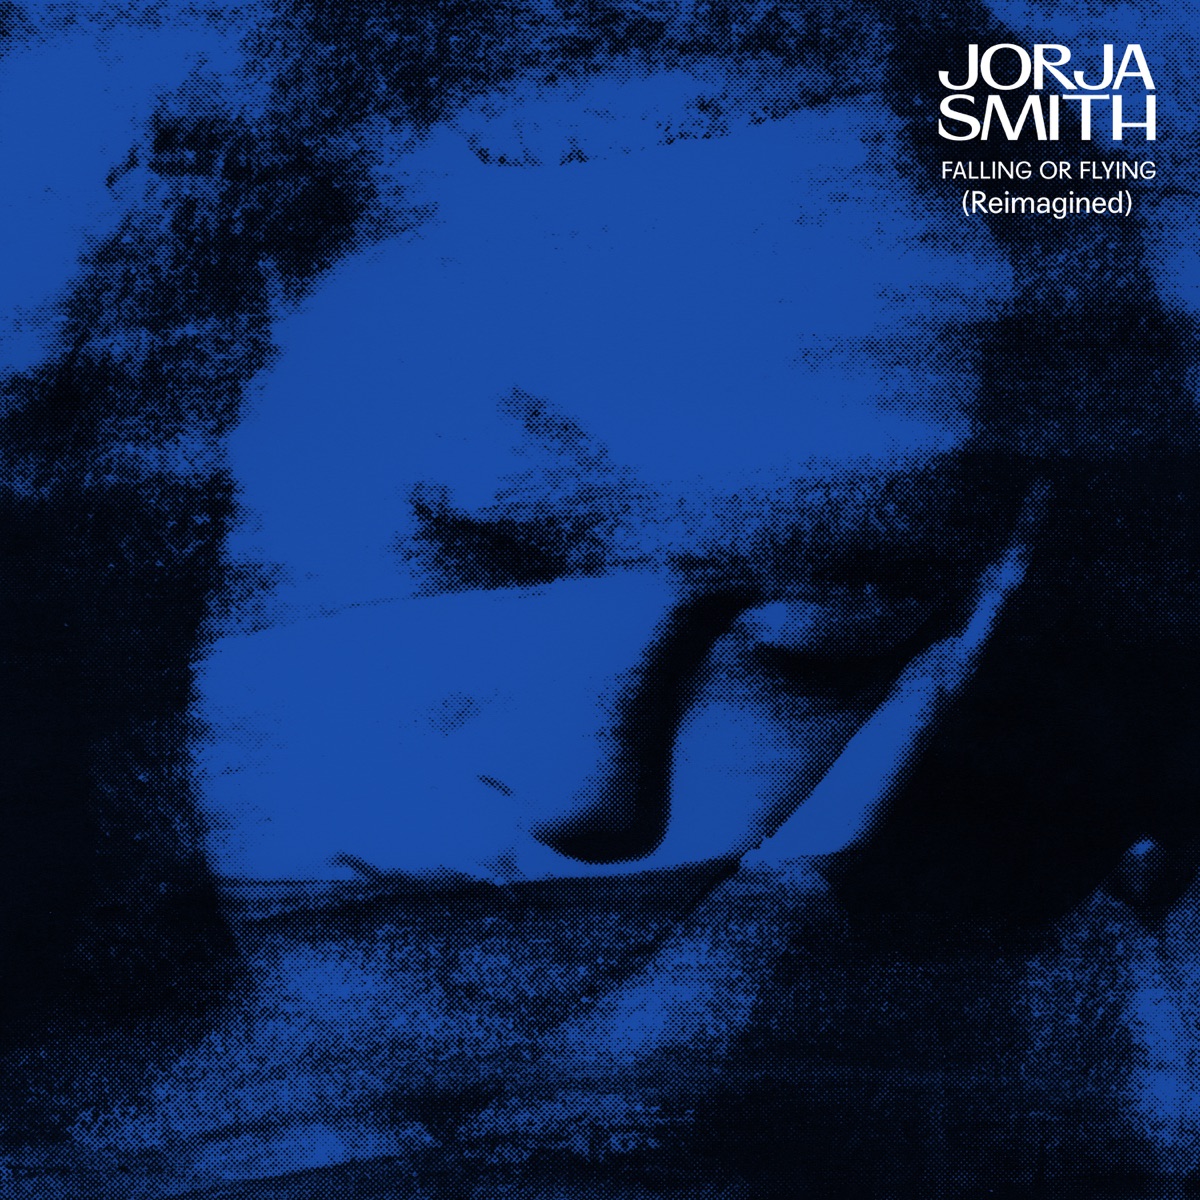 Jorja Smith - Greatest Gift (Reimagined) 1